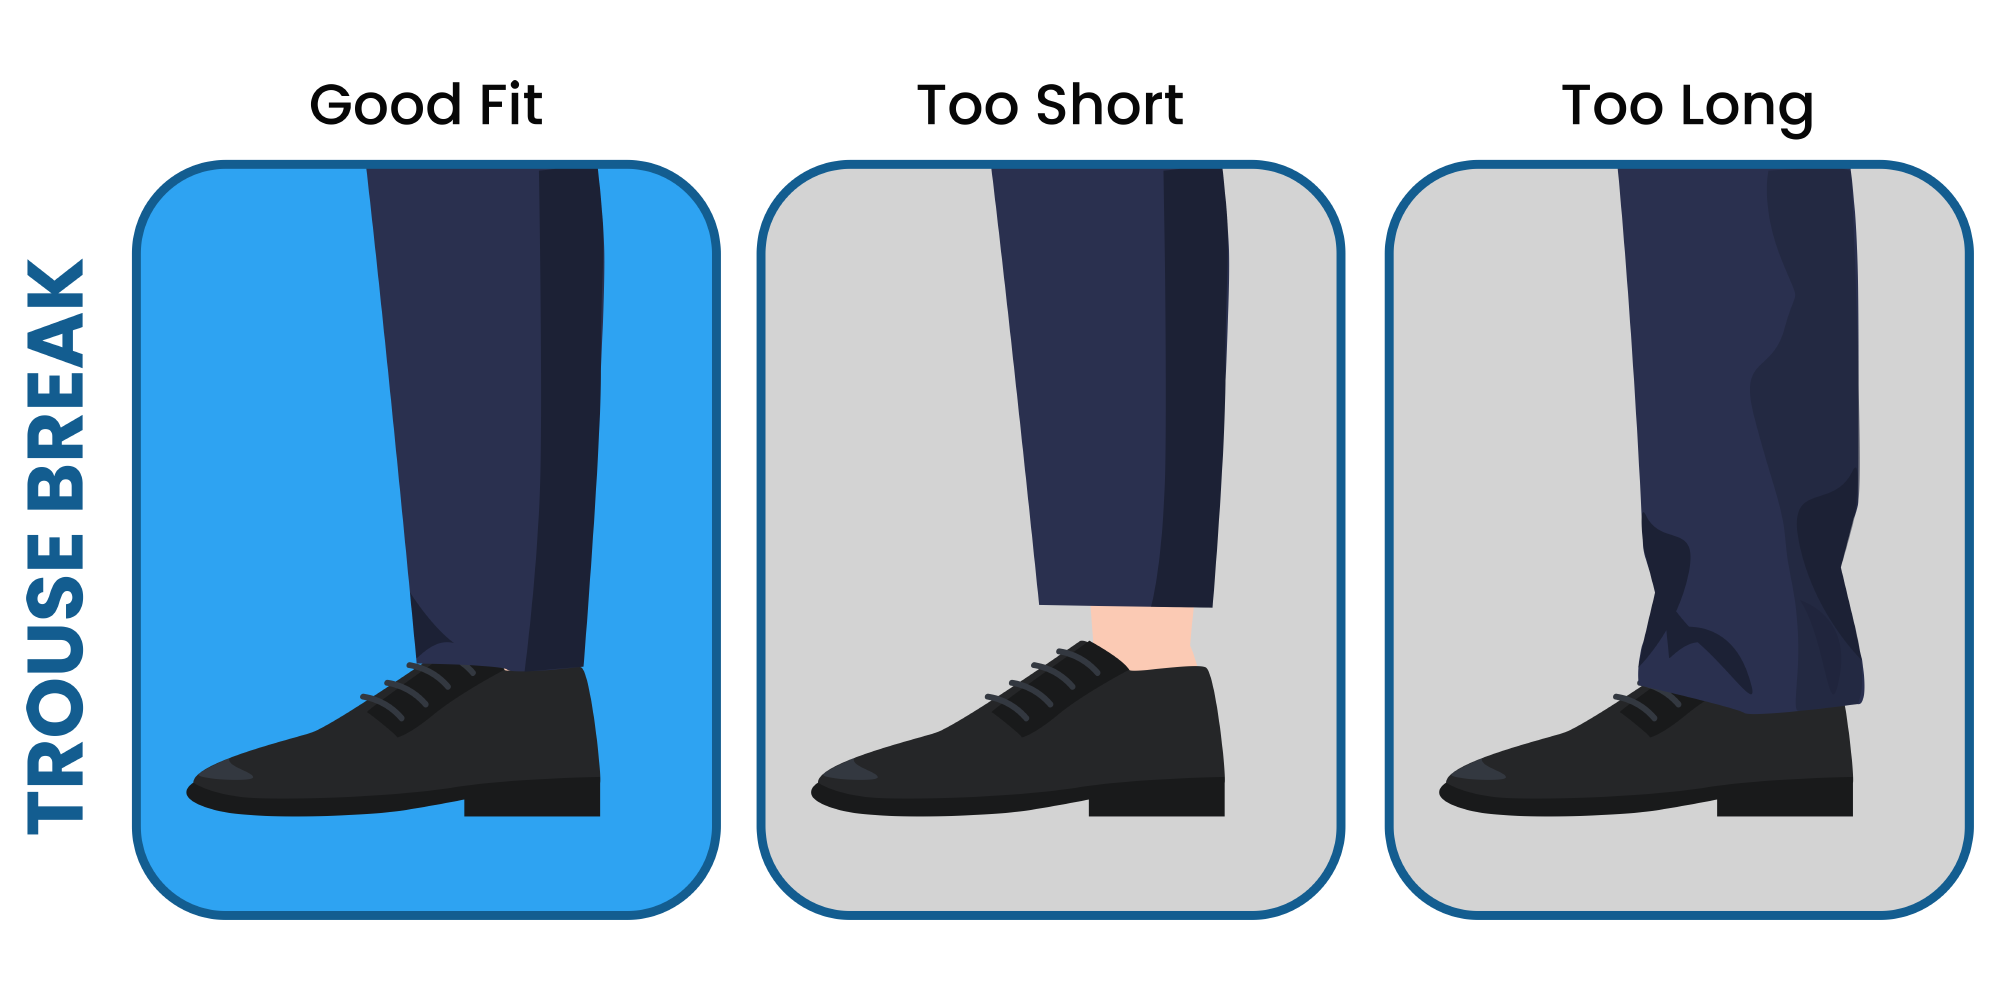 How the trouser break should fit